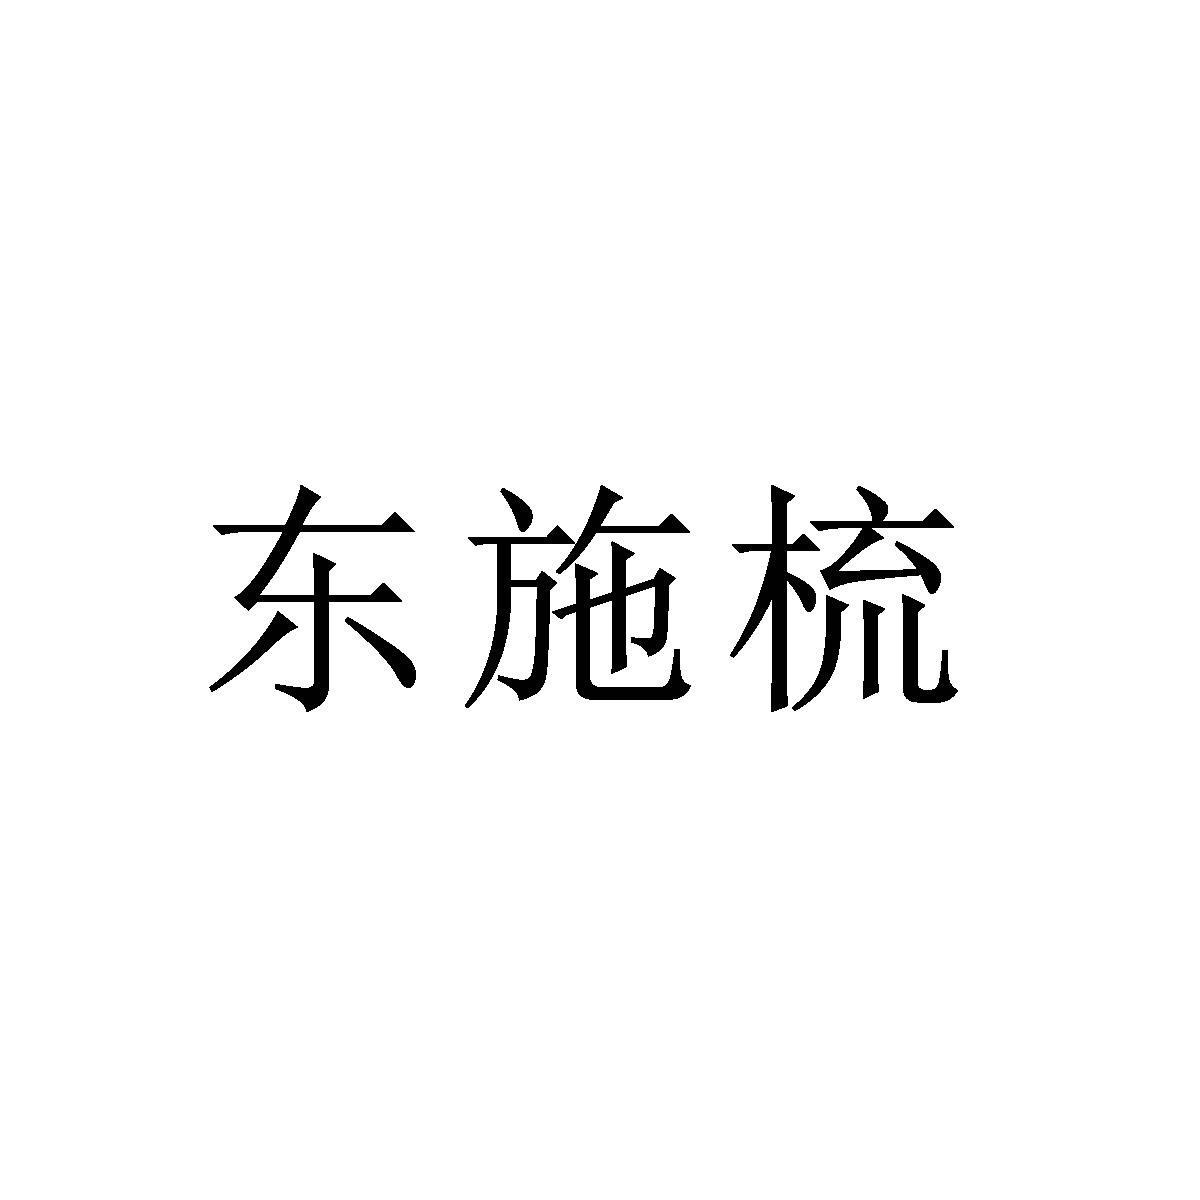 东施梳logo